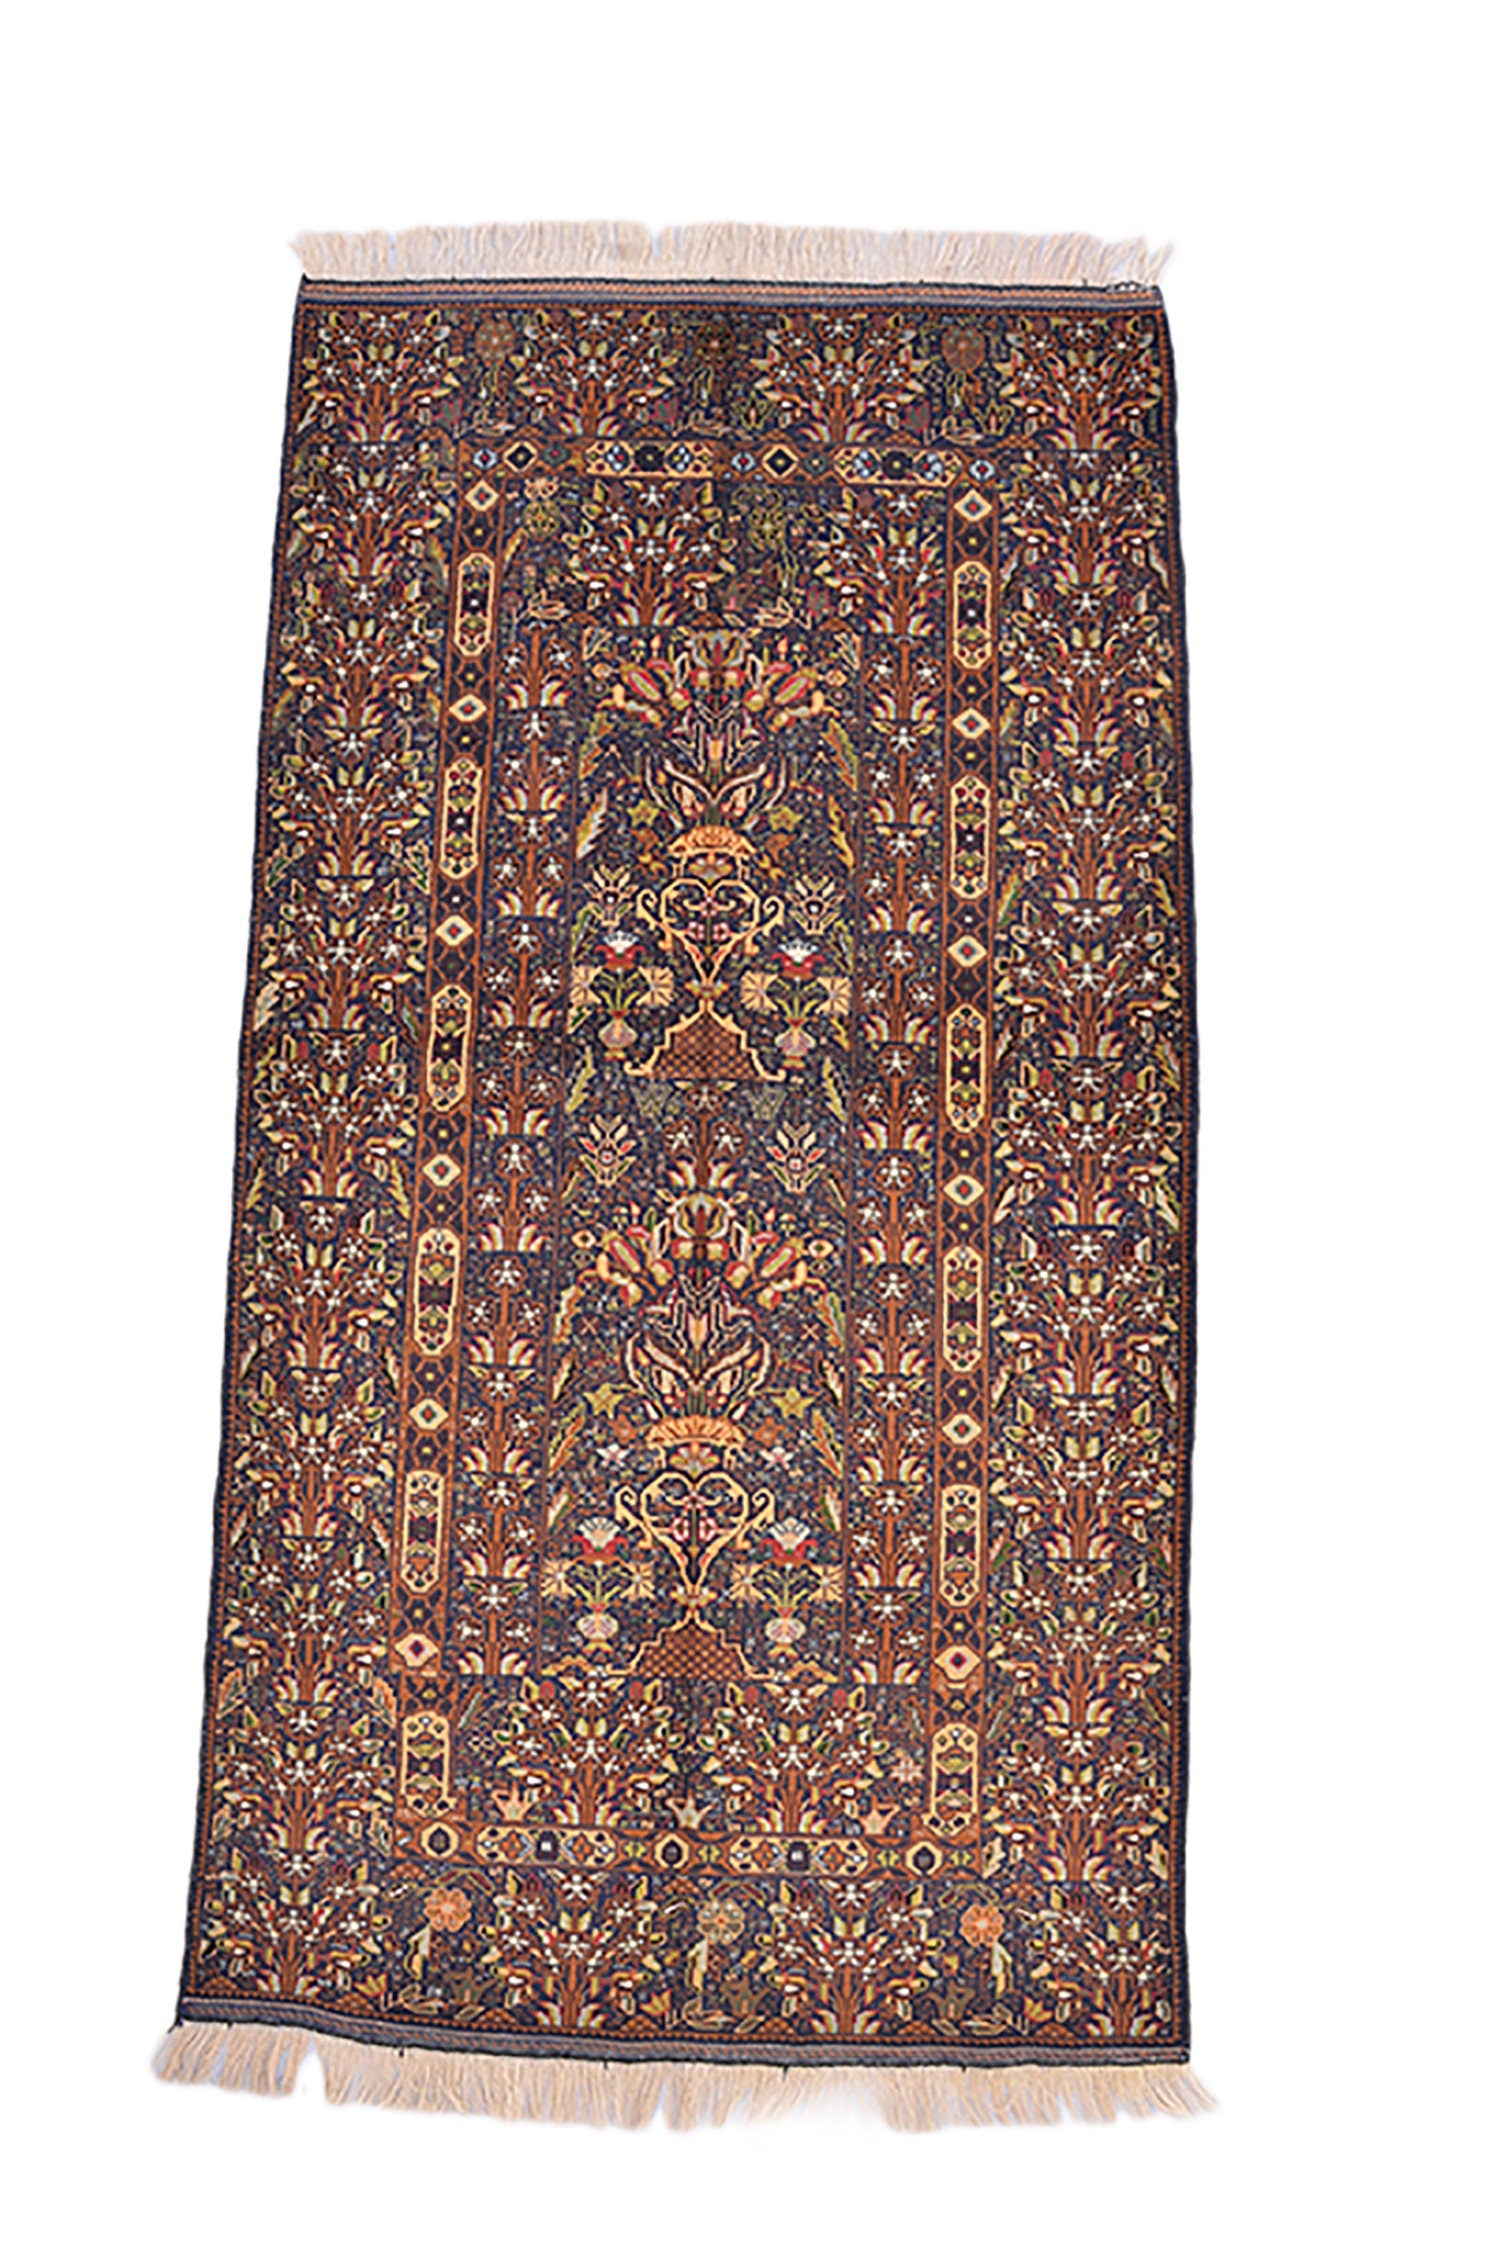 6.7 ft x 3.6 ft, Turkish Vintage Rug, Navy Orange Handmade Rug, Antique Rug Wool, Tribal Floral Area Rug, Dark Rustic Rug